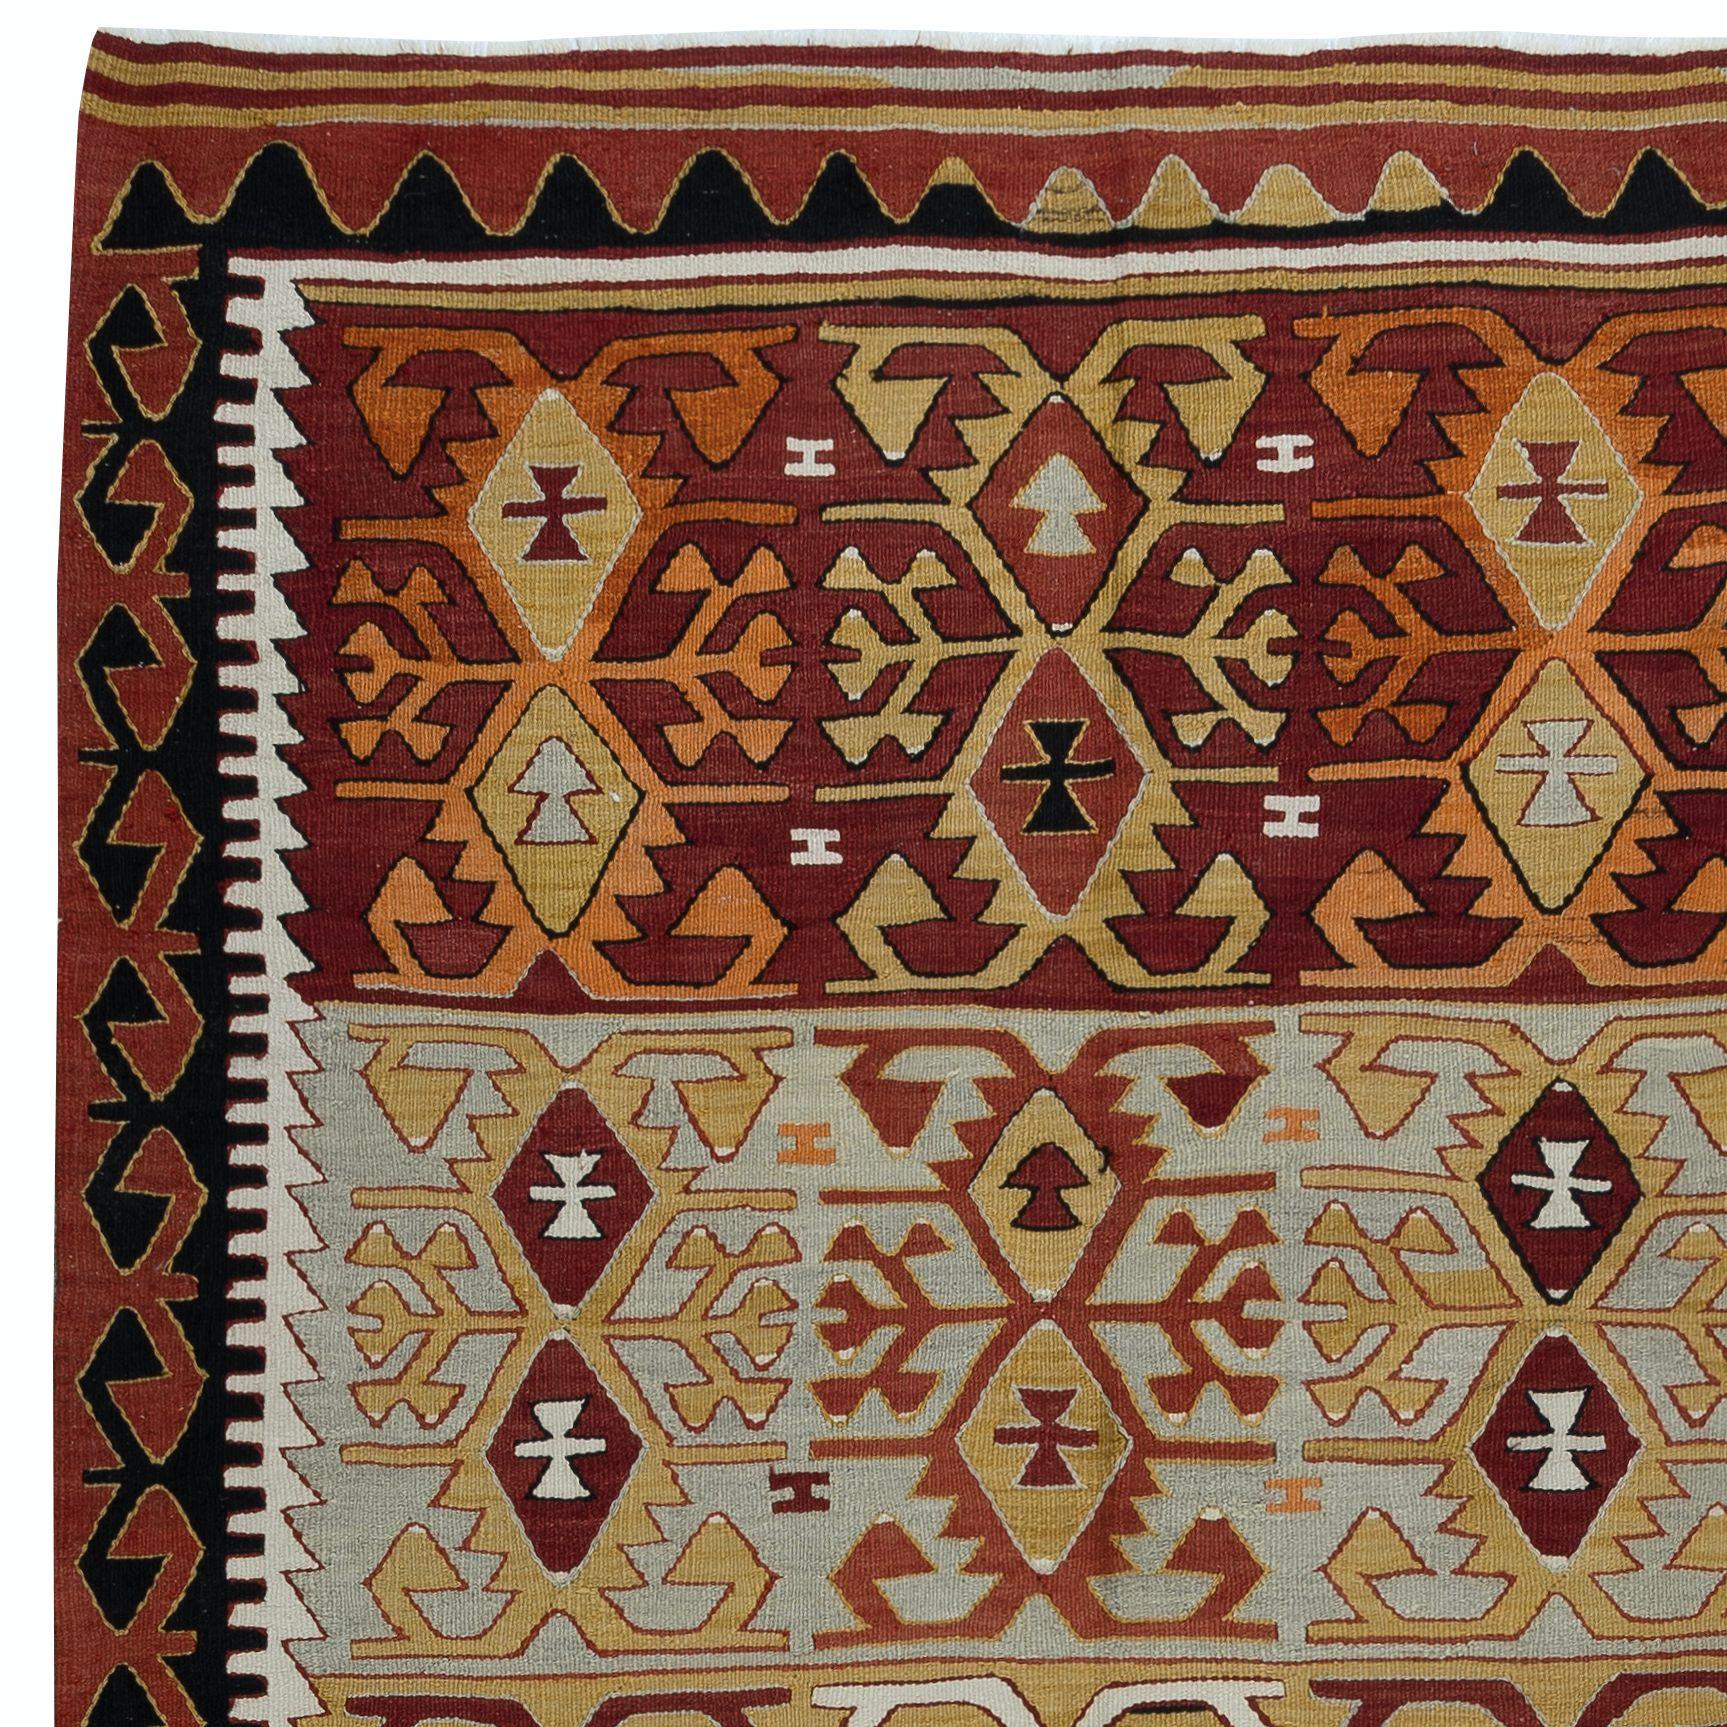 Turkish 5.5x10 Ft Vintage Flat-Weave Kilim, Geometric Hand-Woven Rug, Colorful Carpet For Sale